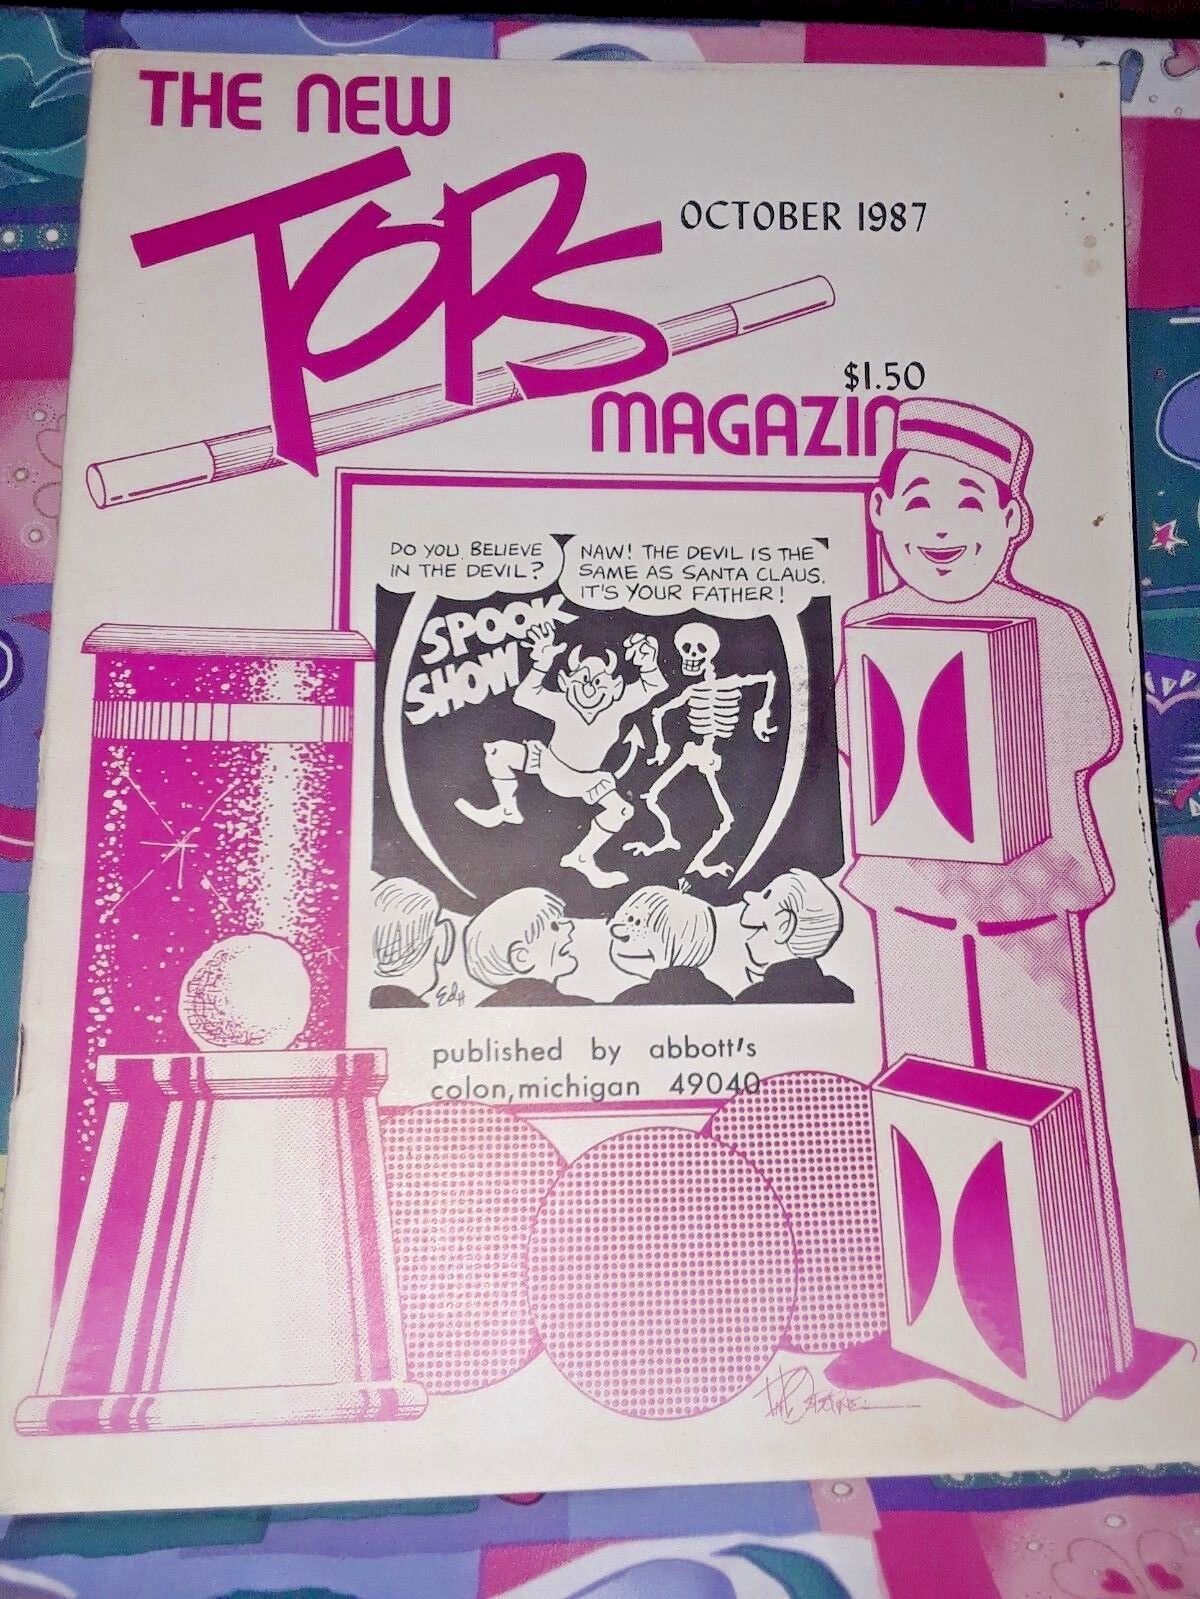 4 VINTAGE MAGIC THE NEW TOPS MAGAZINE PUBLISHED BY abbott's 1986-87-88-92 Без бренда - фотография #4